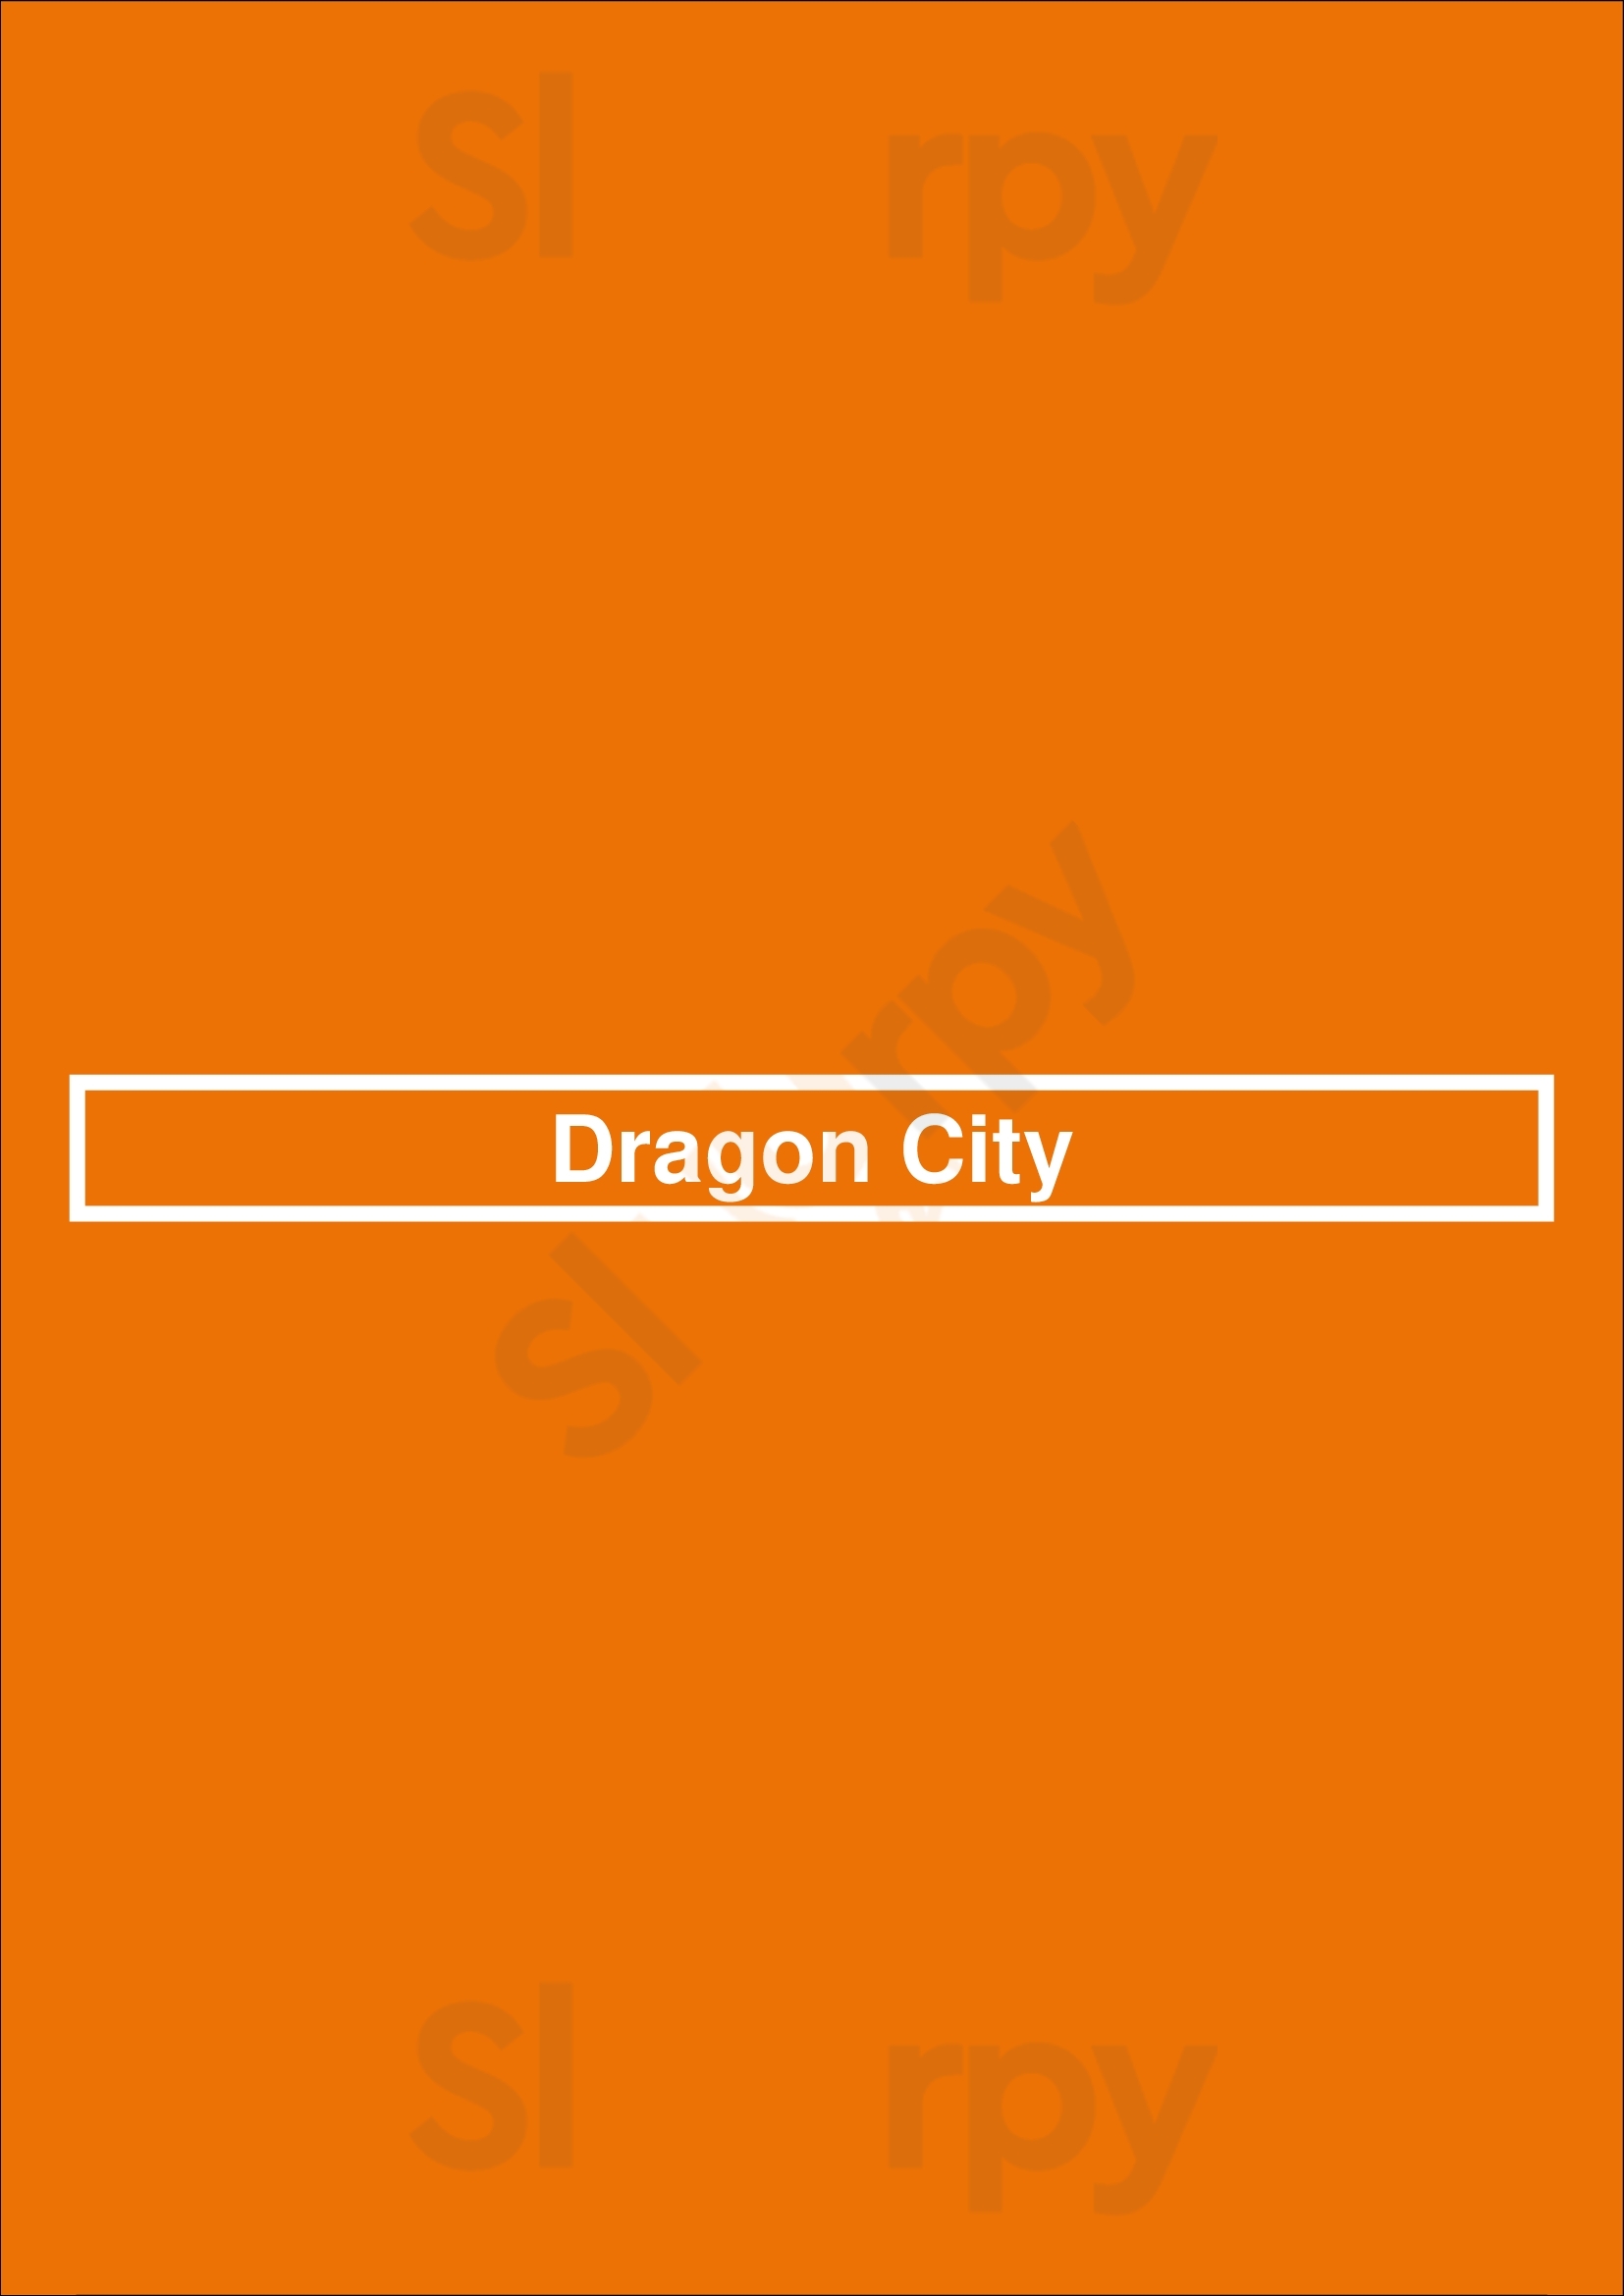 Dragon City Caerphilly Menu - 1